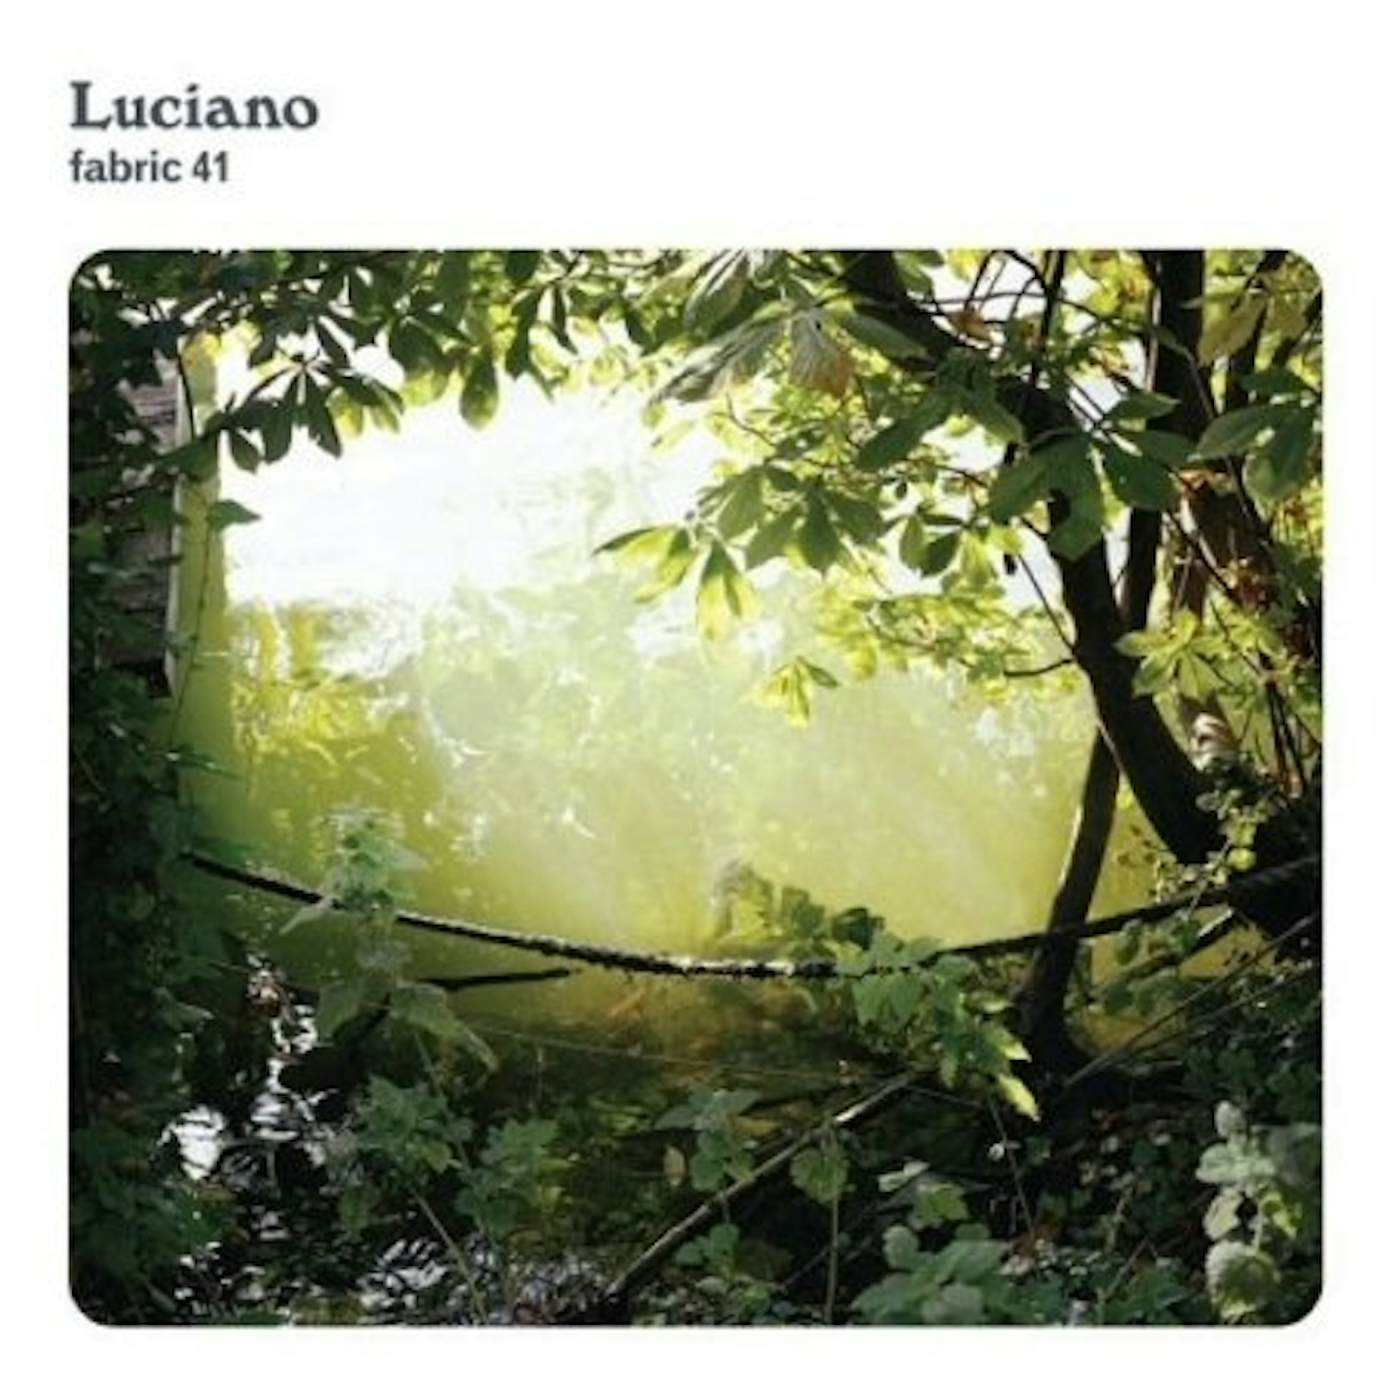 Luciano FABRIC 41 CD